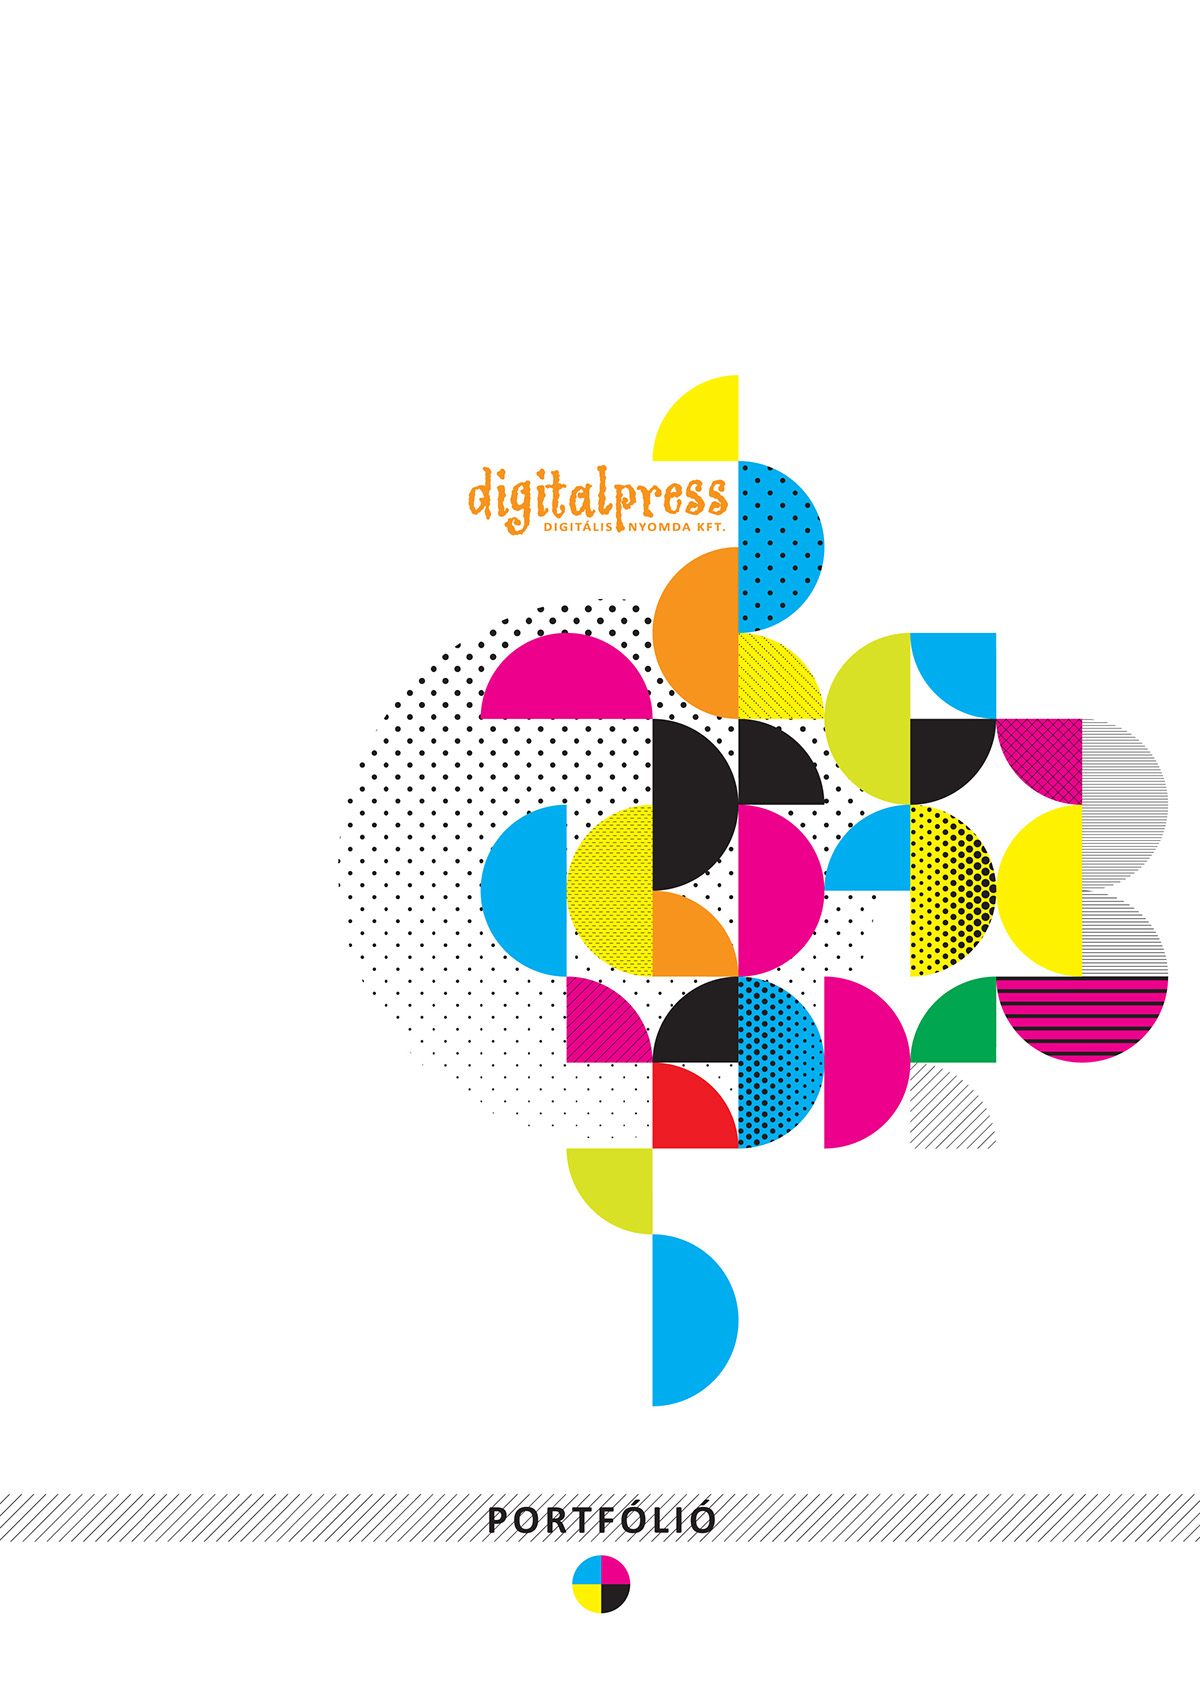 digitalpress